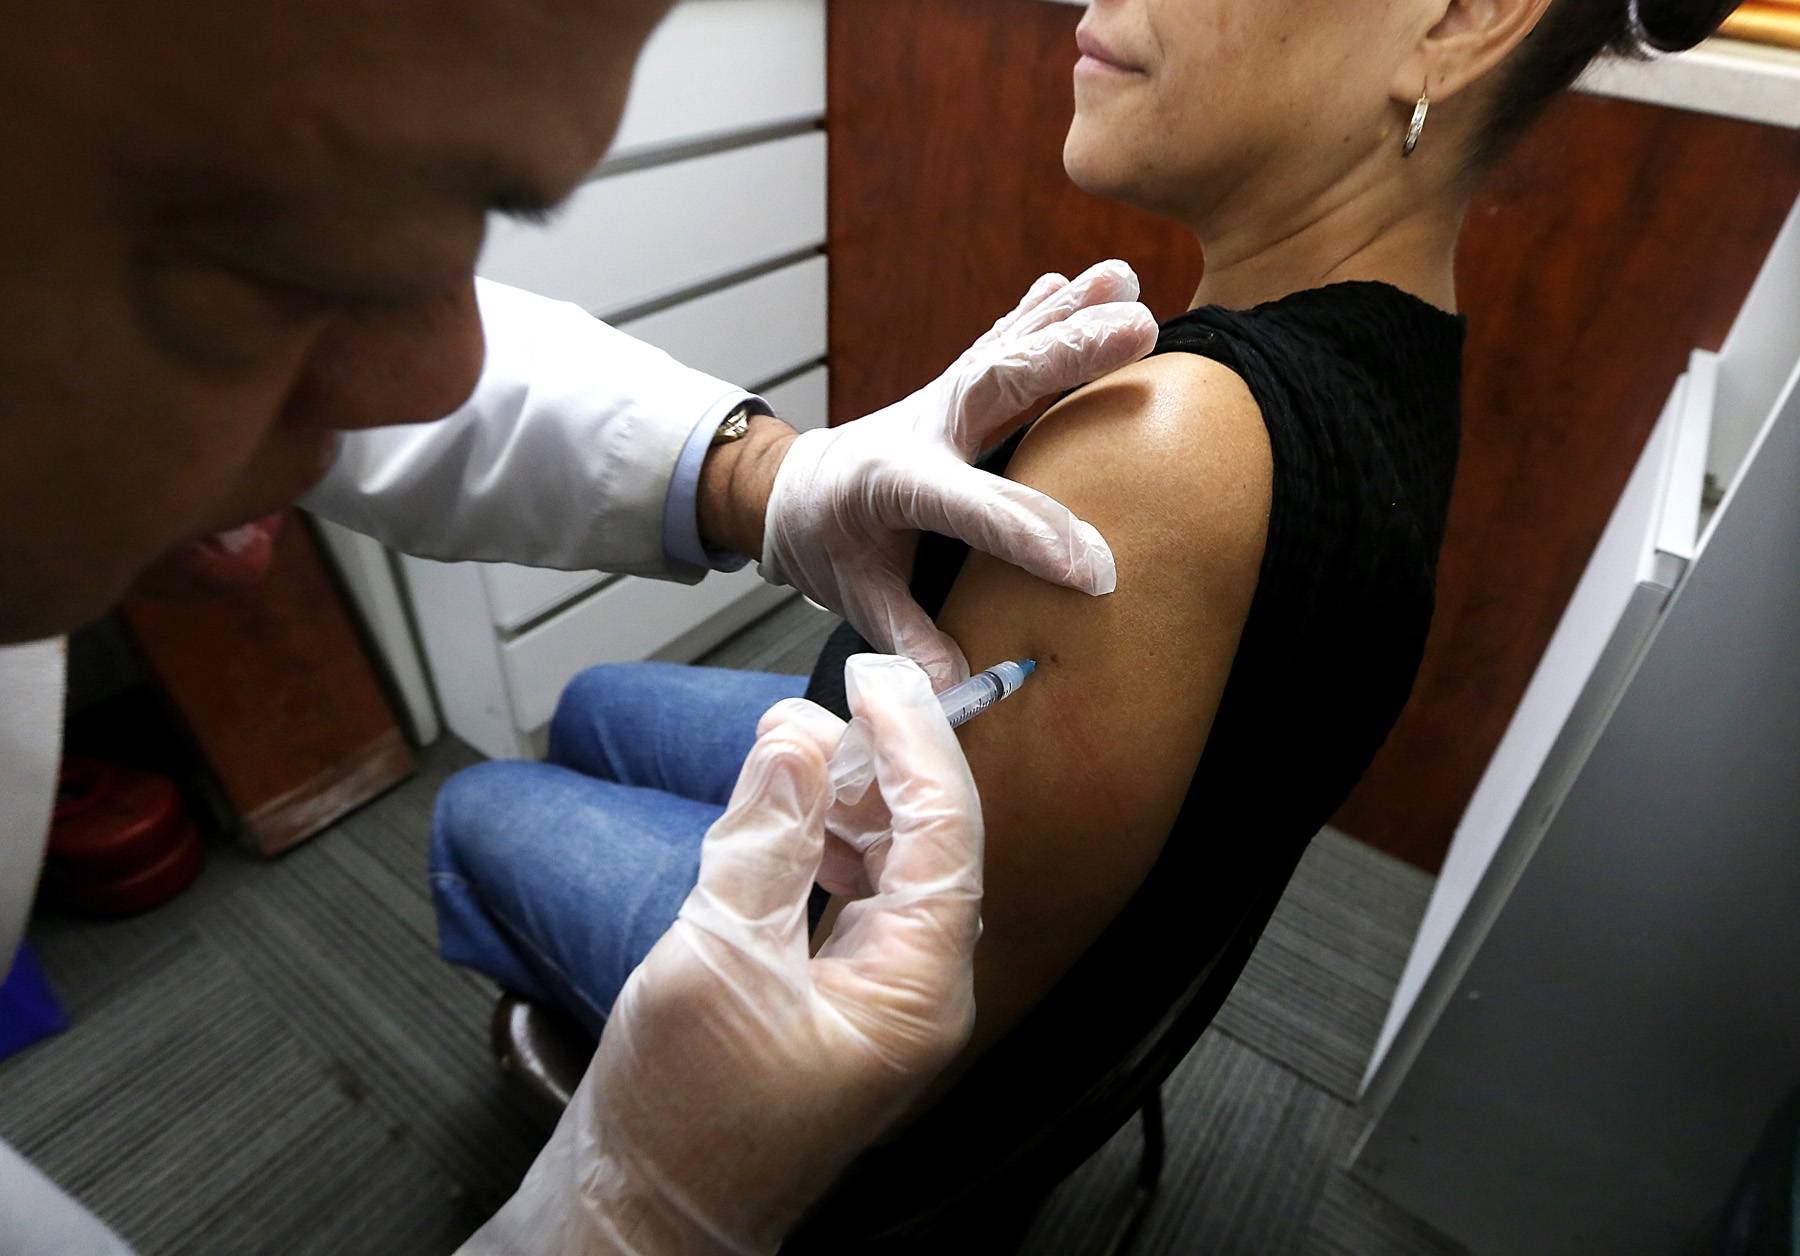 Are Pharmacies Meeting the Flu Vaccine Demand?